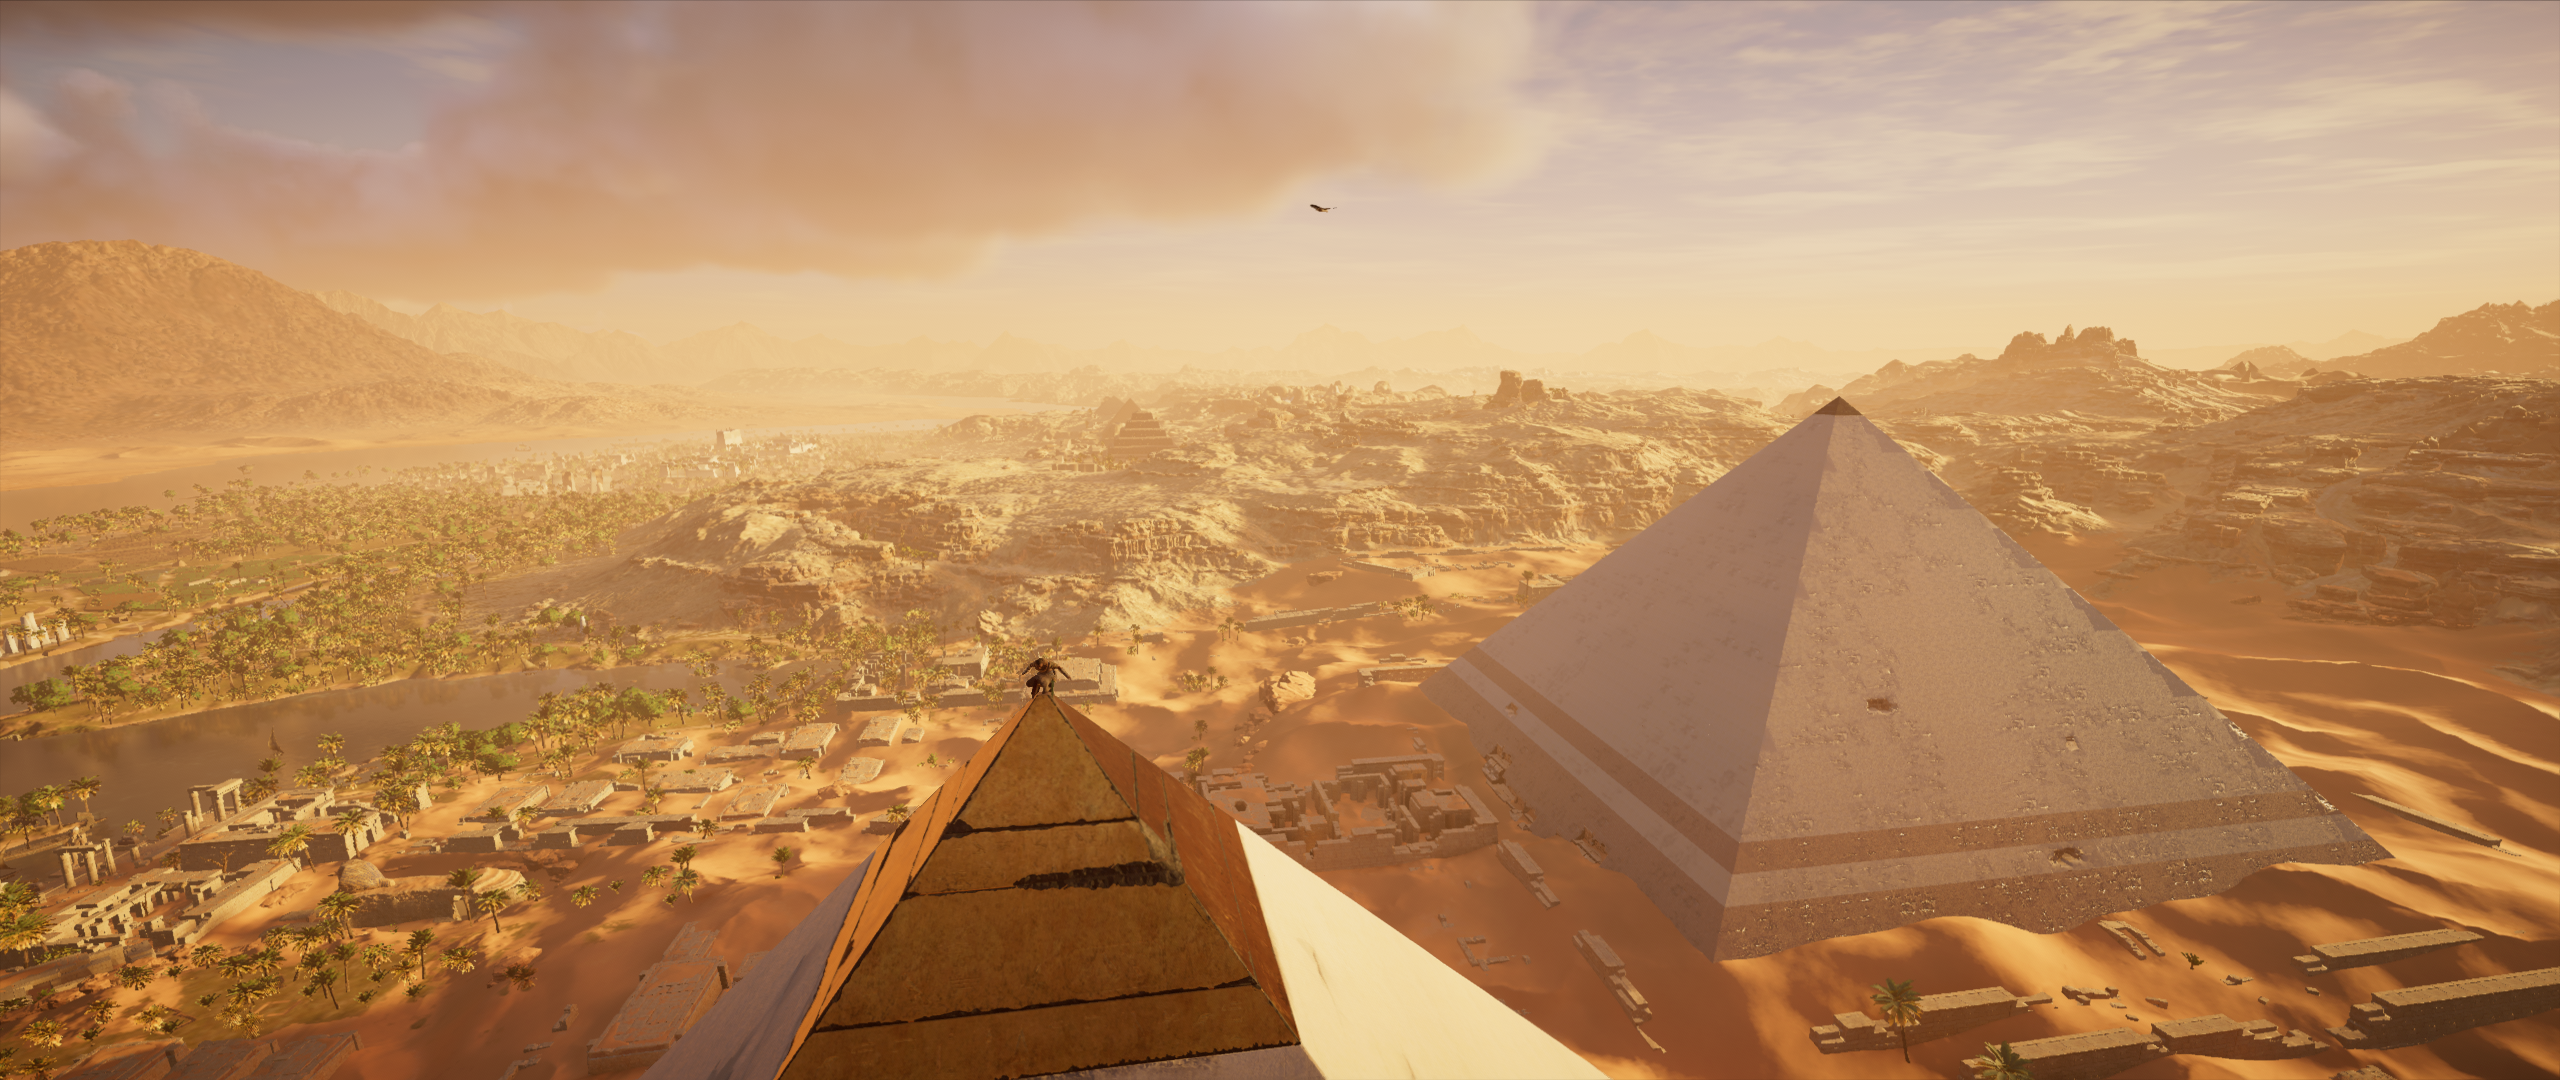 General 2560x1080 Assassin's Creed: Origins Pyramids of Giza Egypt Bayek landscape video games PC gaming pyramid